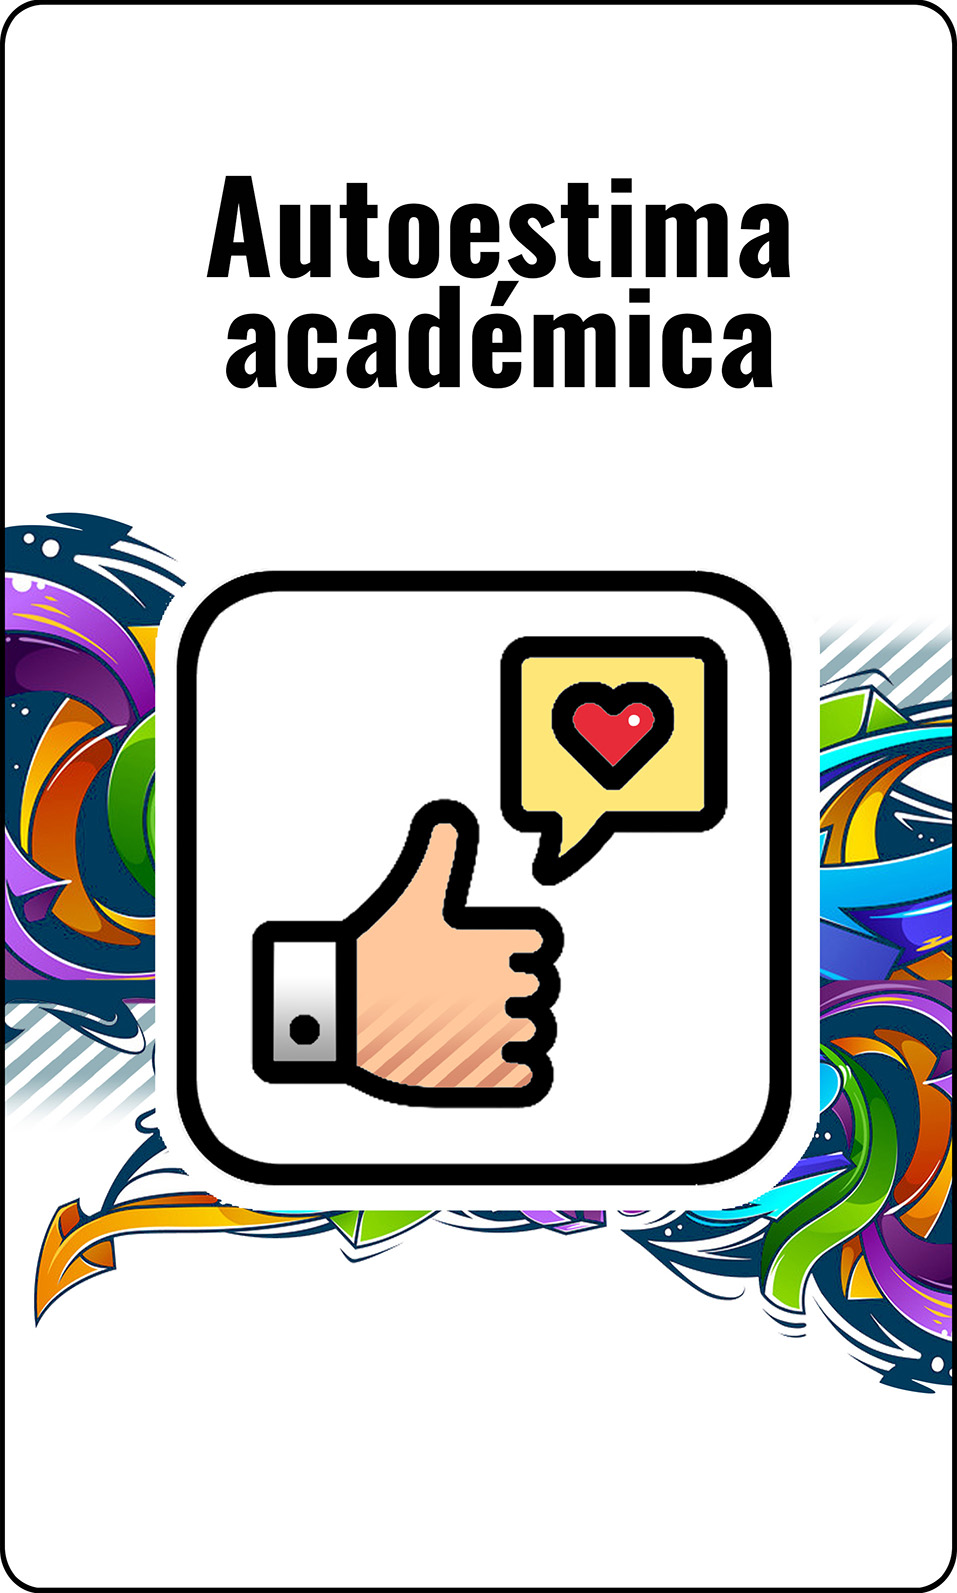 Token Autoestima Academica REC